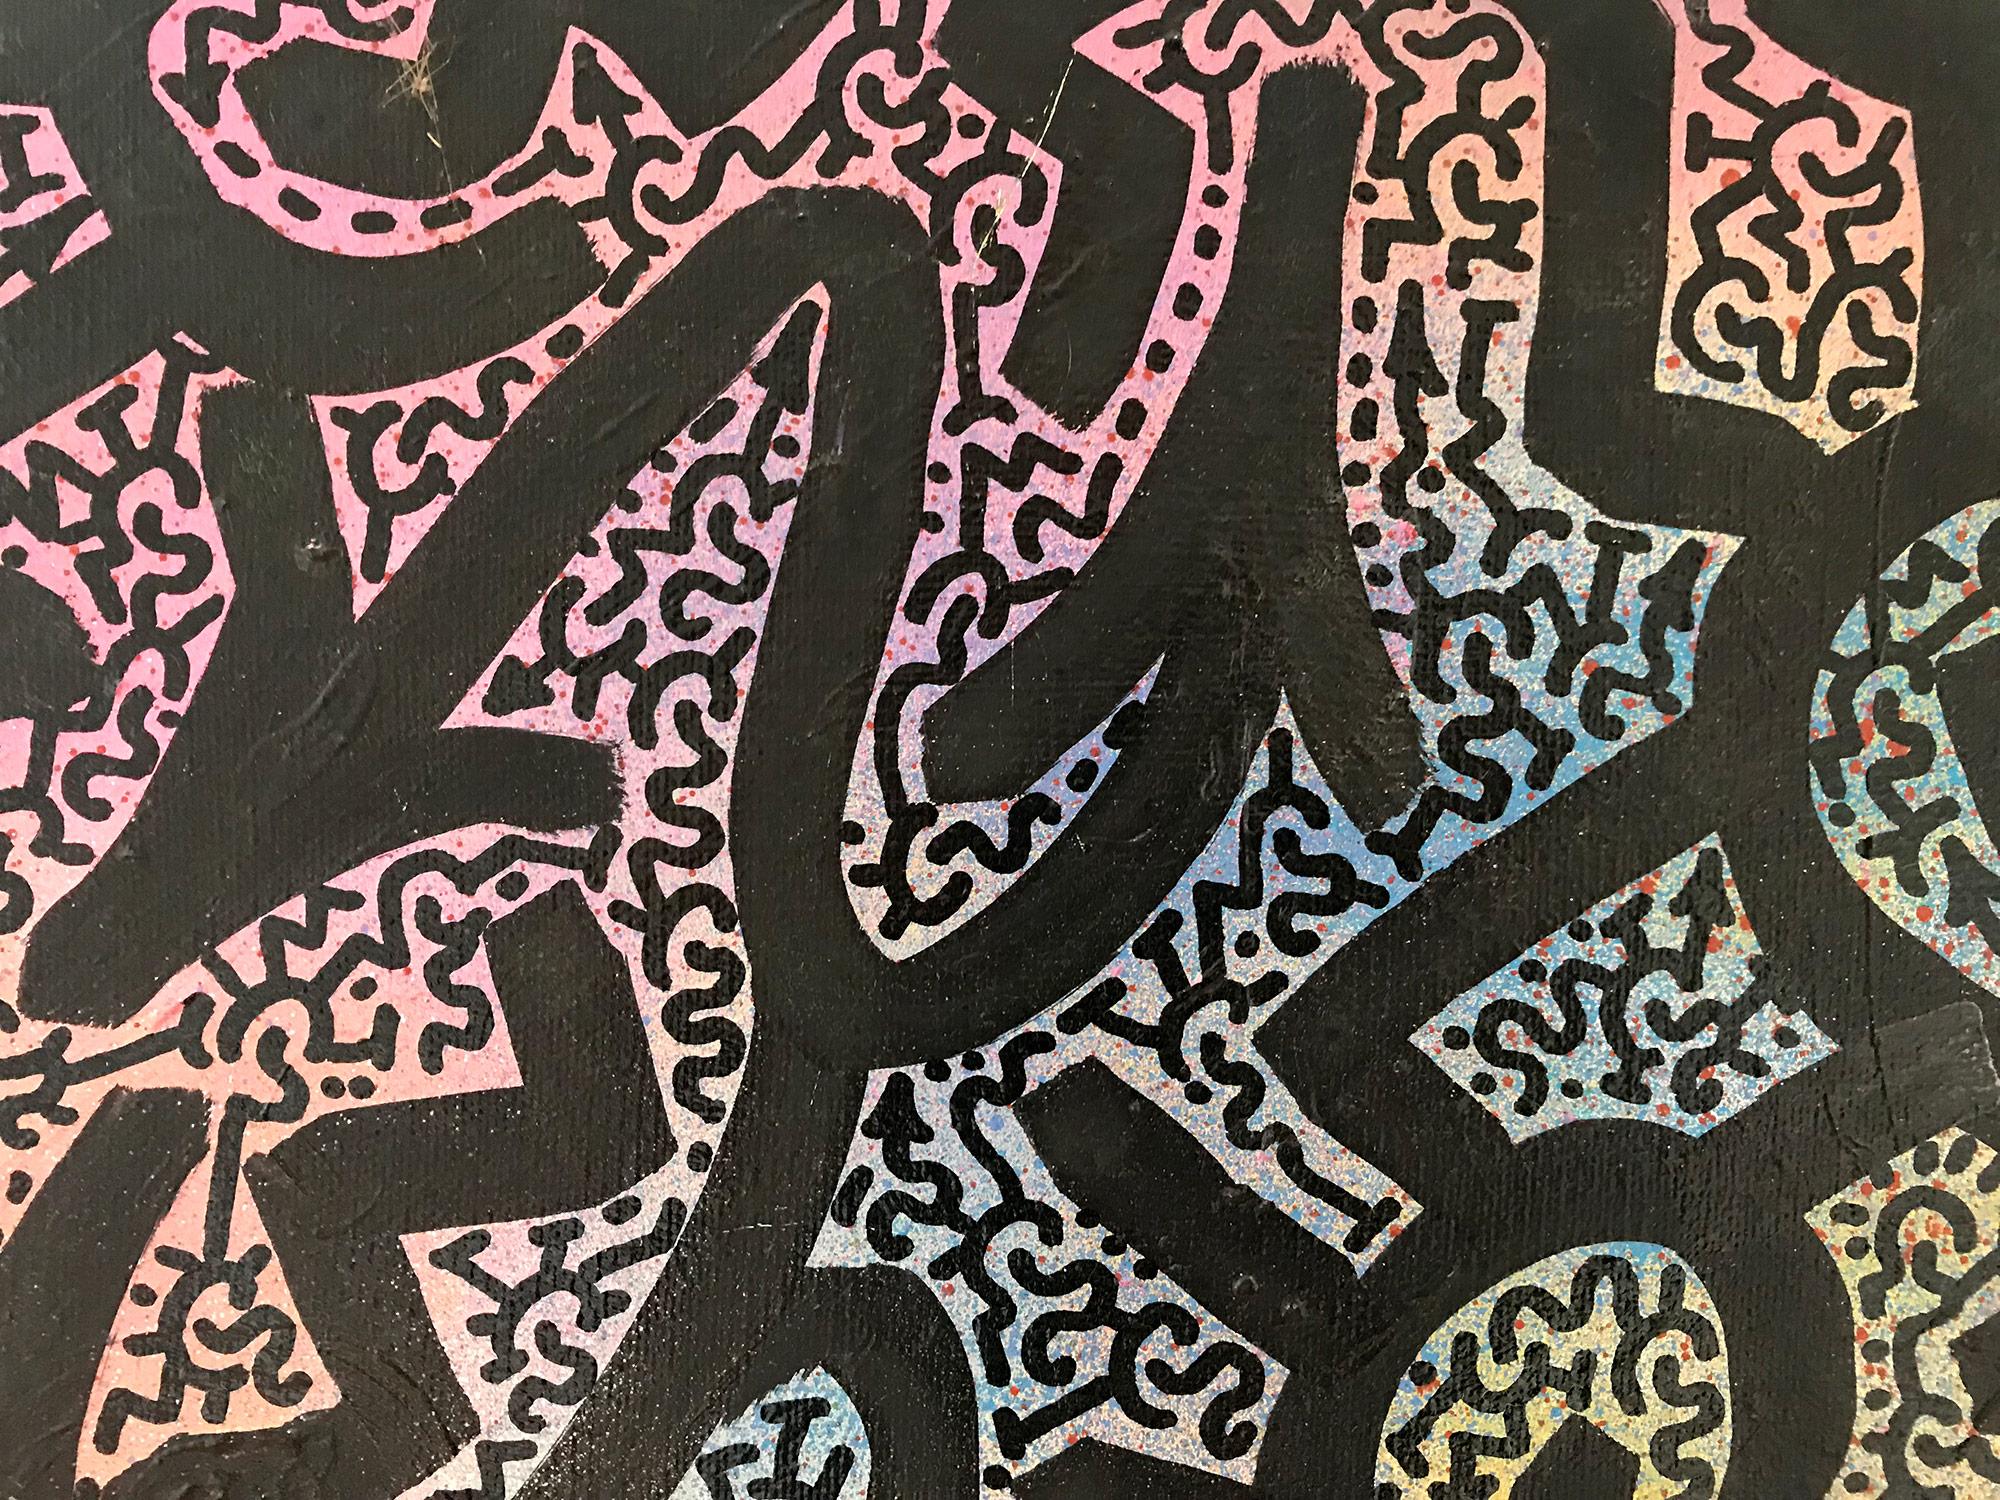 Tag on Prism of Colors, Partner of Keith Haring, Street Art - Painting by LA II (Angel Ortiz)